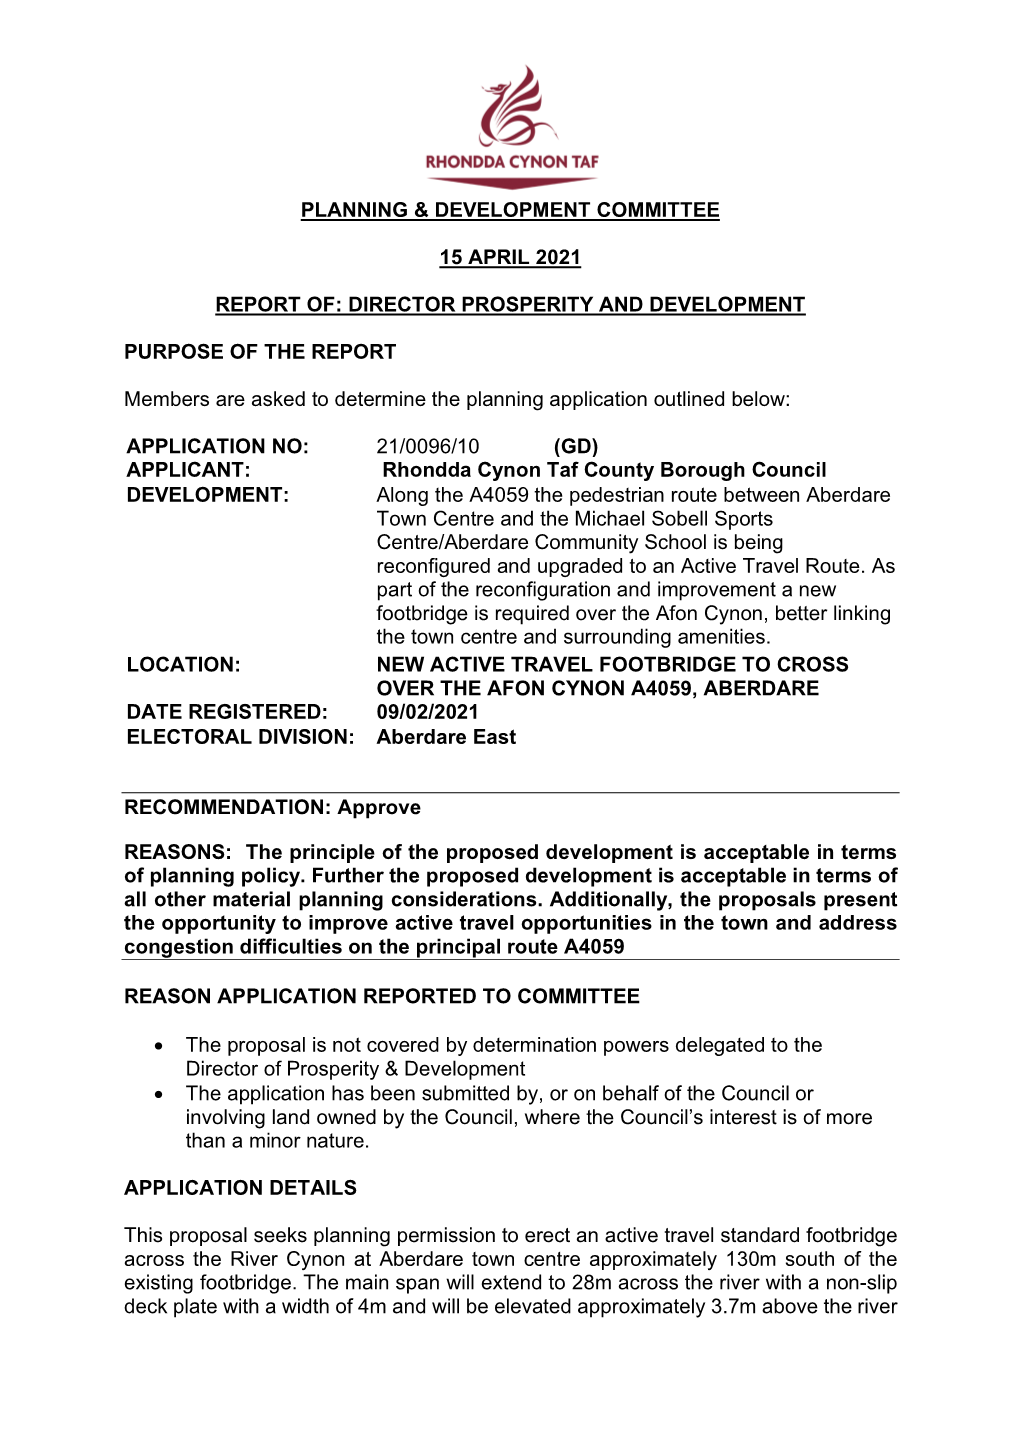 Planning & Development Committee 15 April 2021